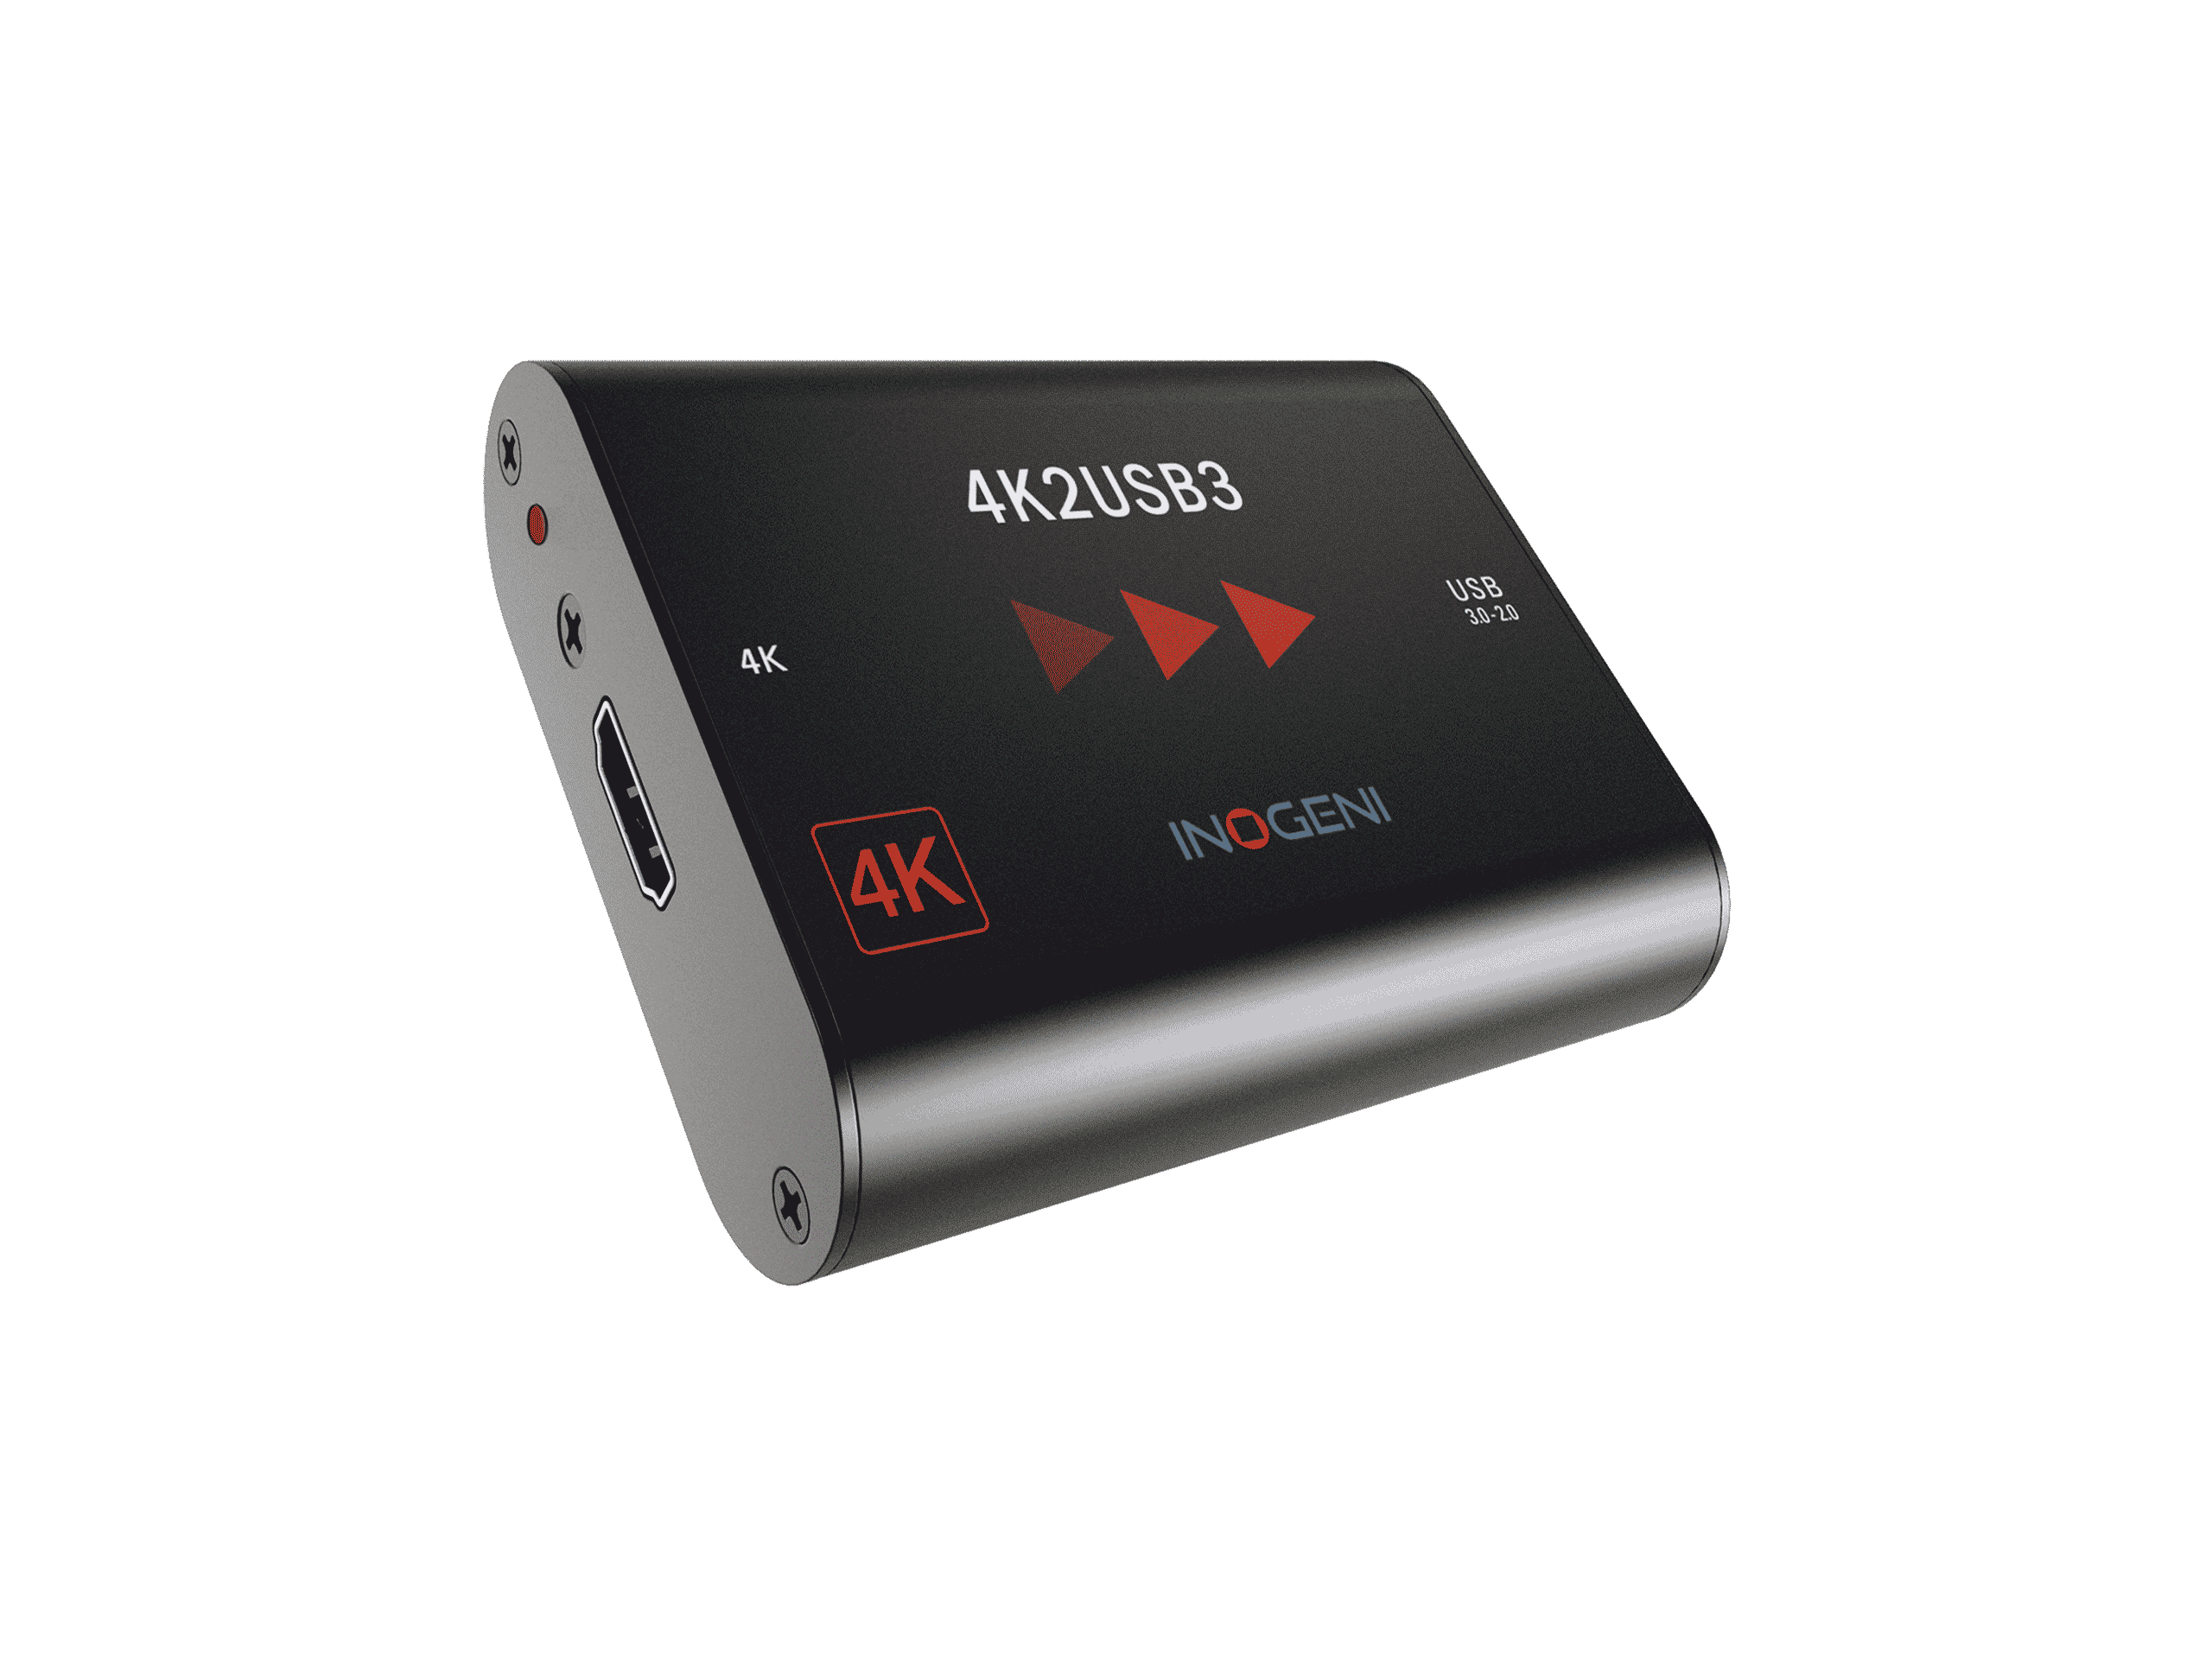 Camera converter | 4K2USB3 USB 3.0 Capture Card | INOGENI